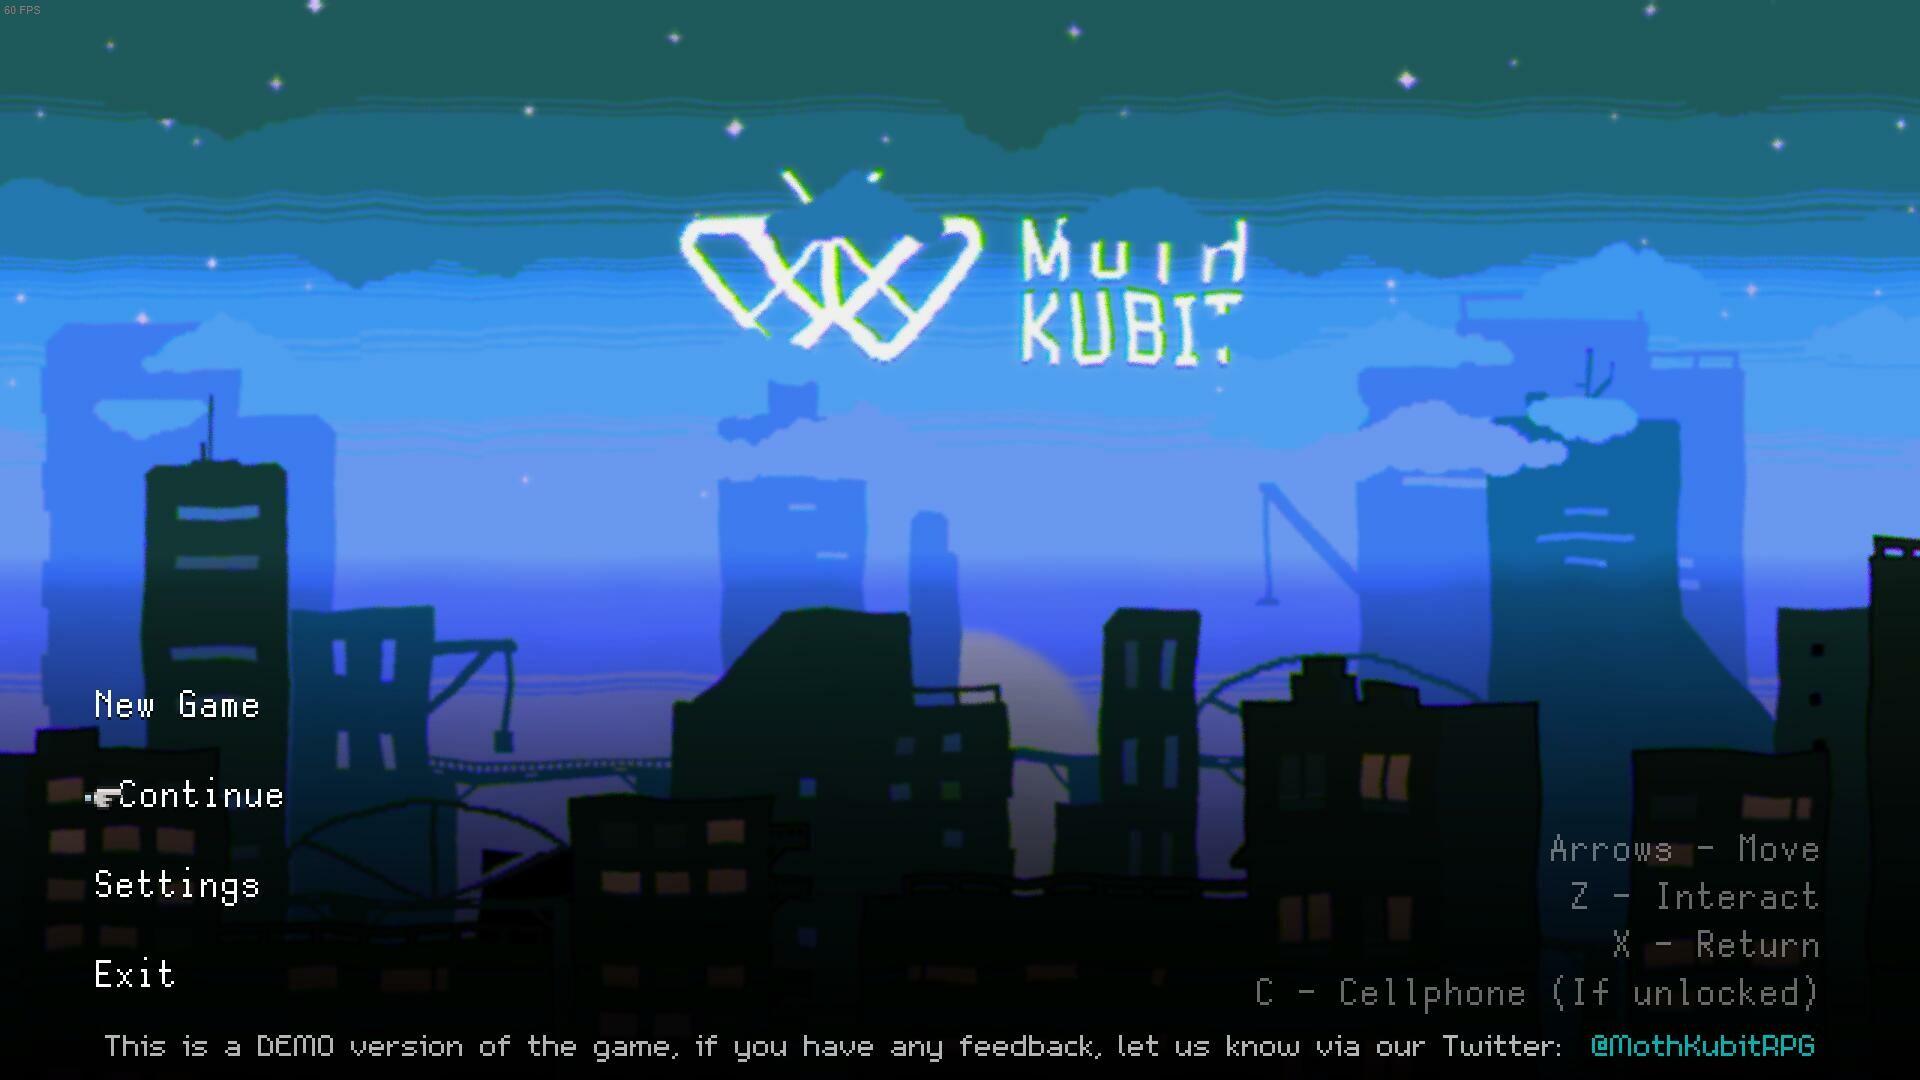 Screenshot of Moth Kubit